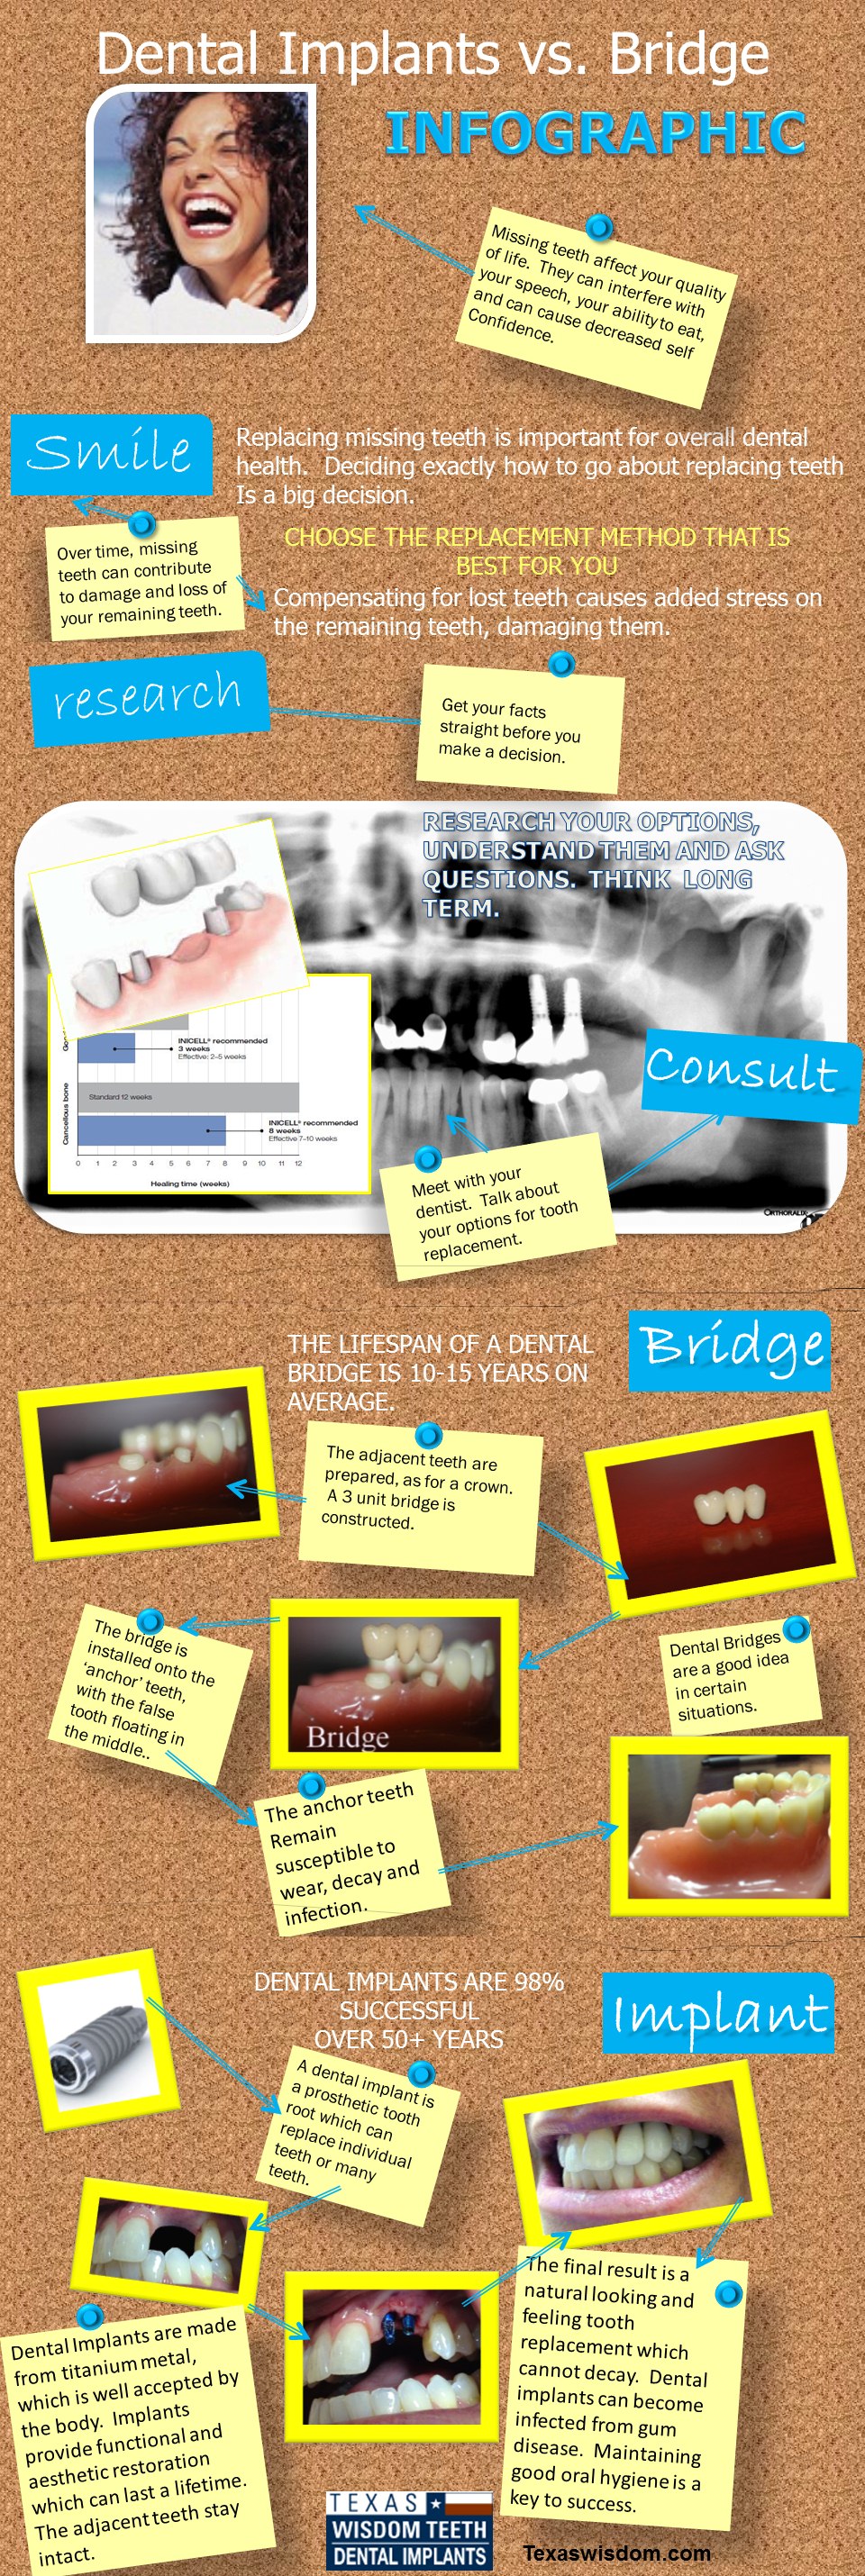 Dental Implant vs. Bridge infographic